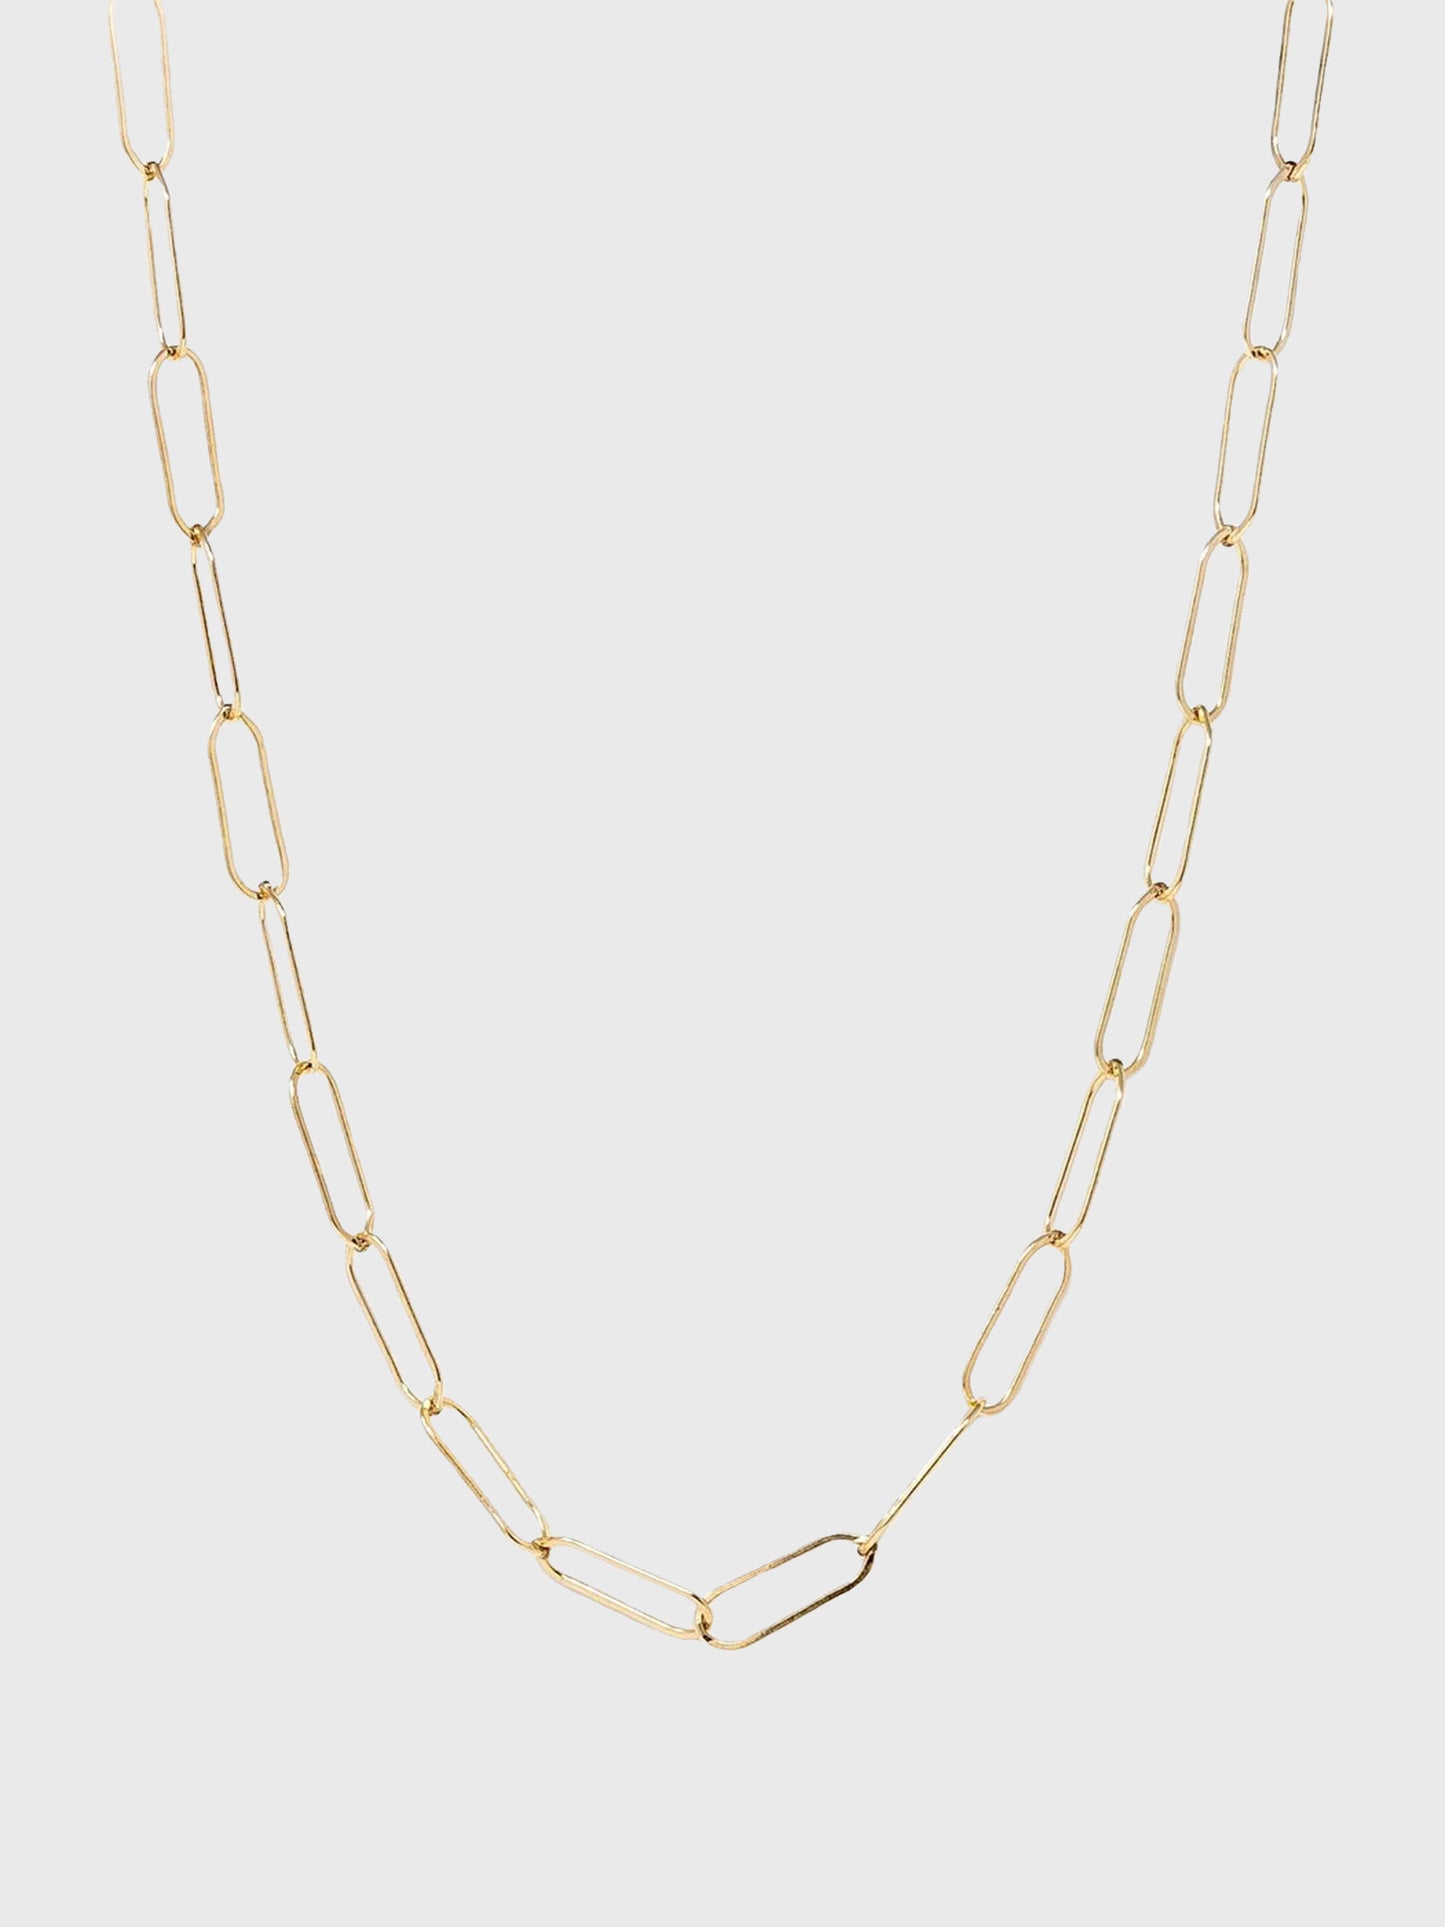 Kozakh Jewelry Muse Chain Necklace